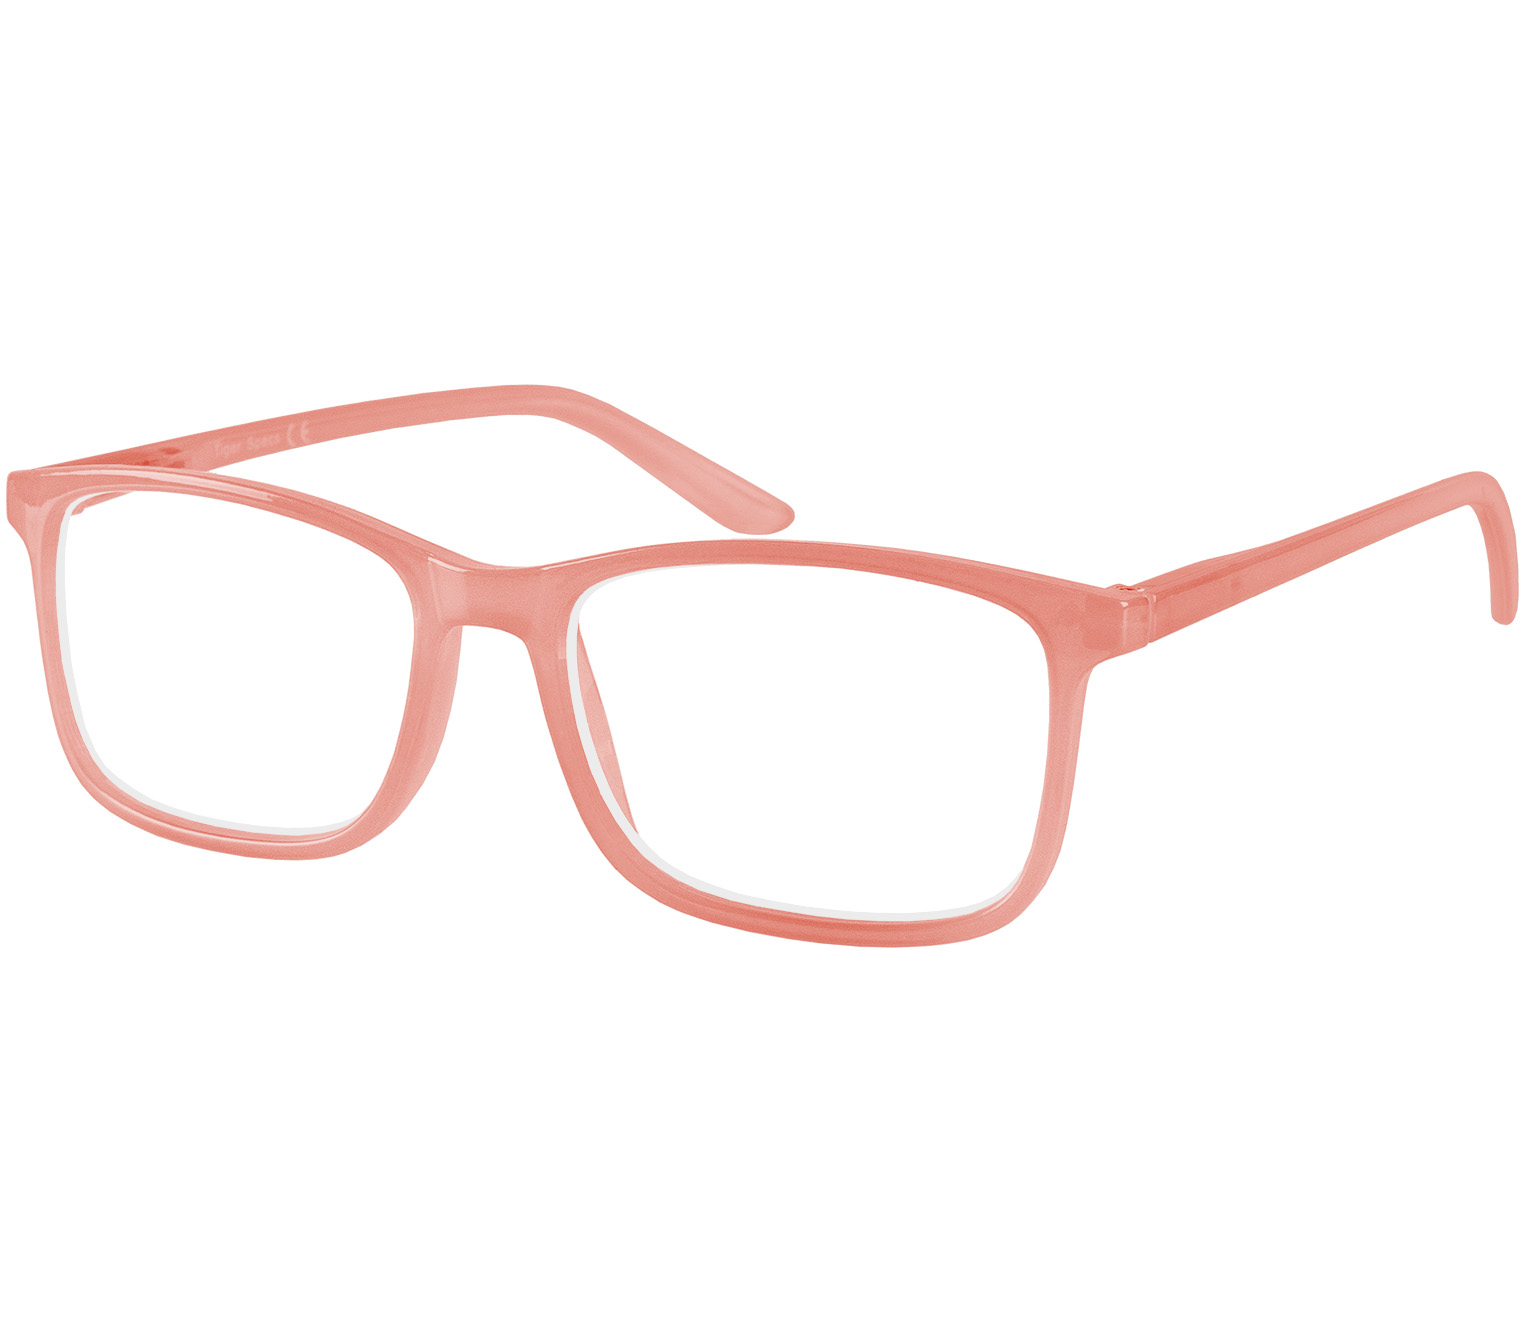 Main Image (Angle) - Sundae (Coral) Classic Reading Glasses